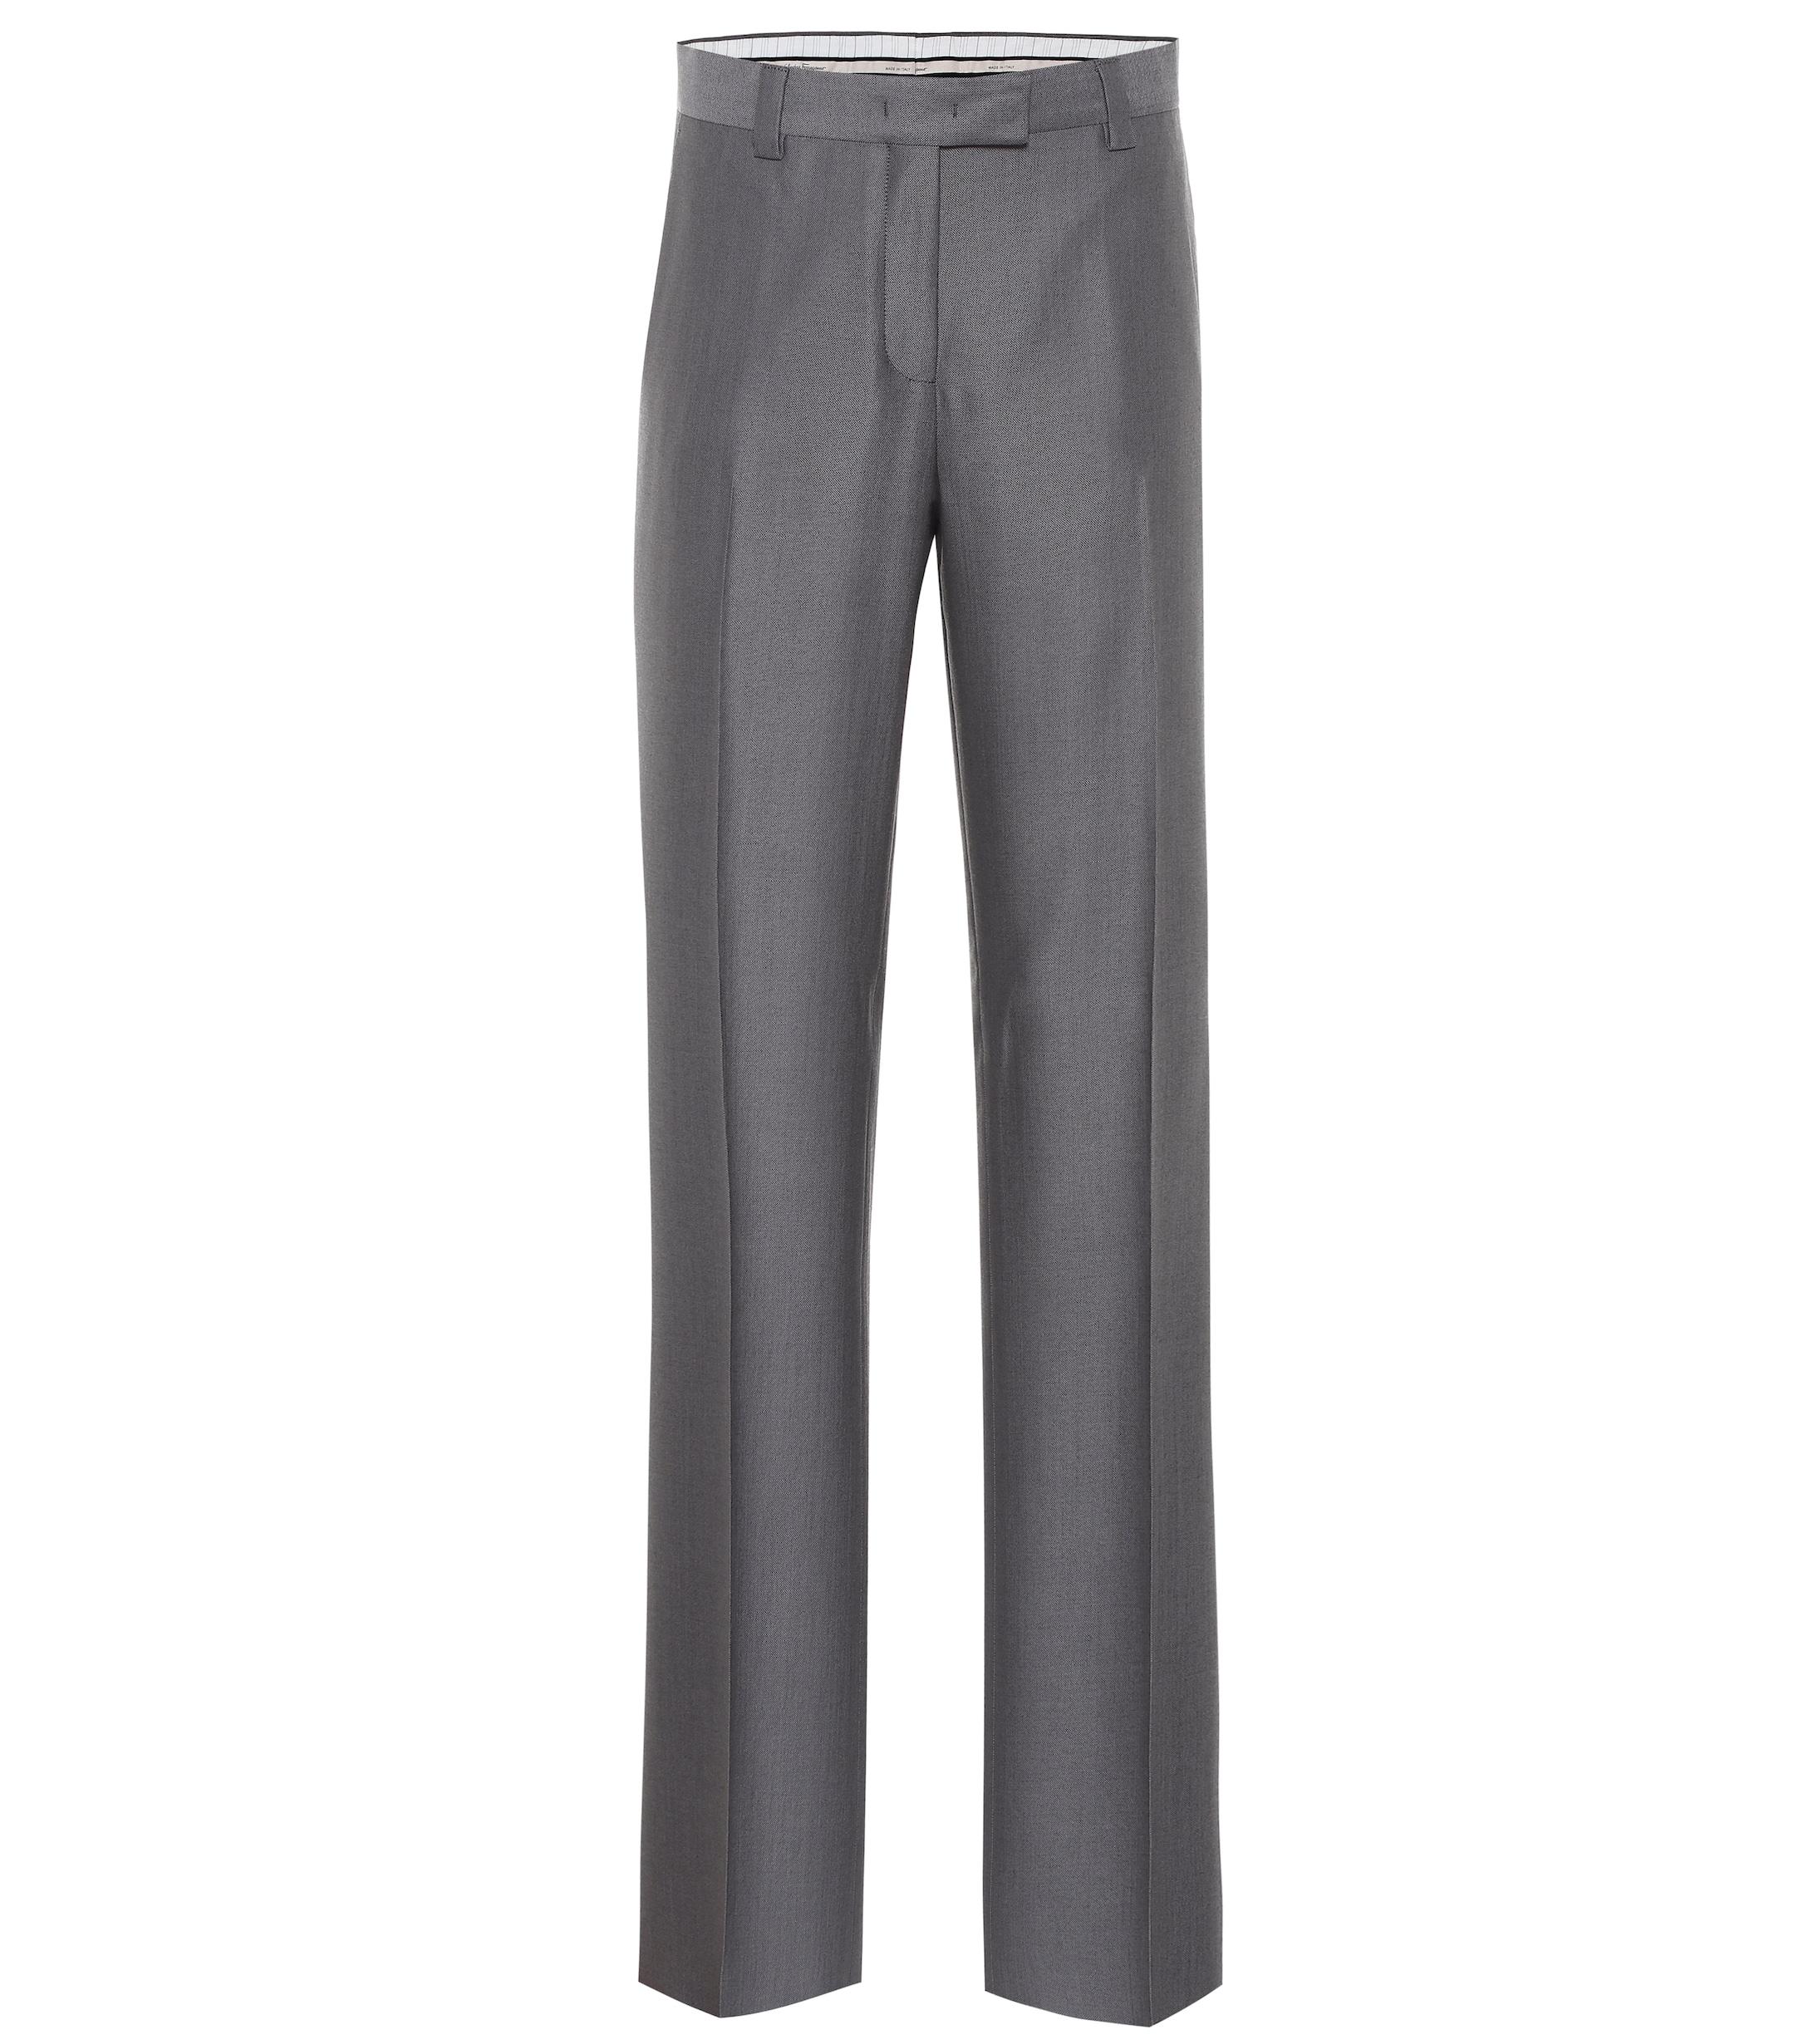 Ferragamo Wool Pants in Grey (Gray) - Save 30% - Lyst